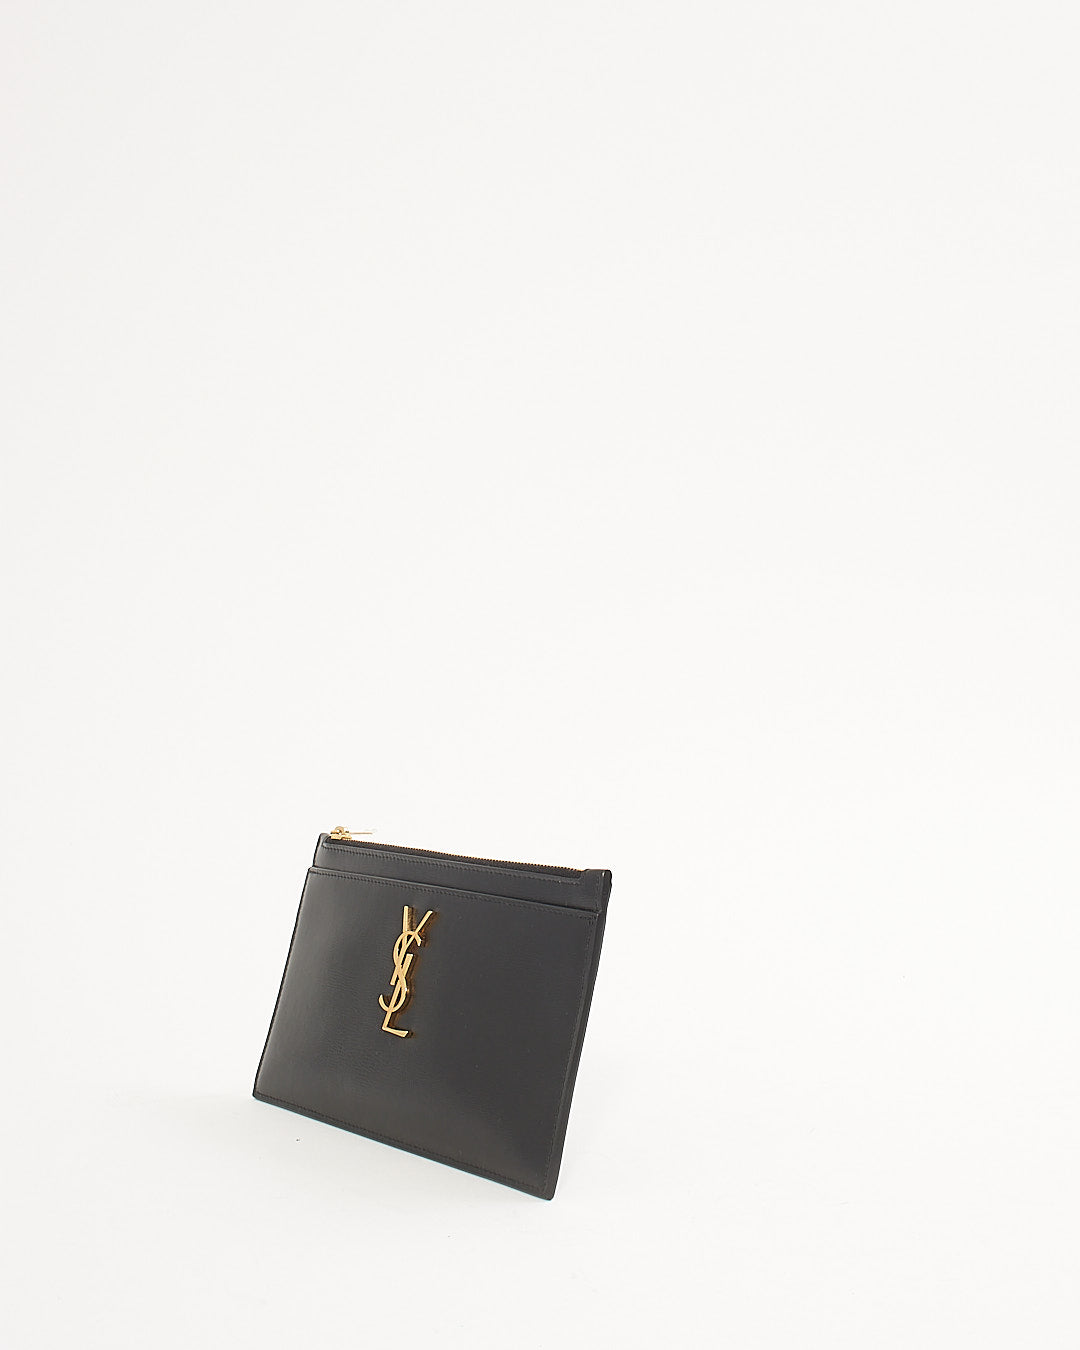 Saint Laurent Black Smooth Leather Envelope Pouch